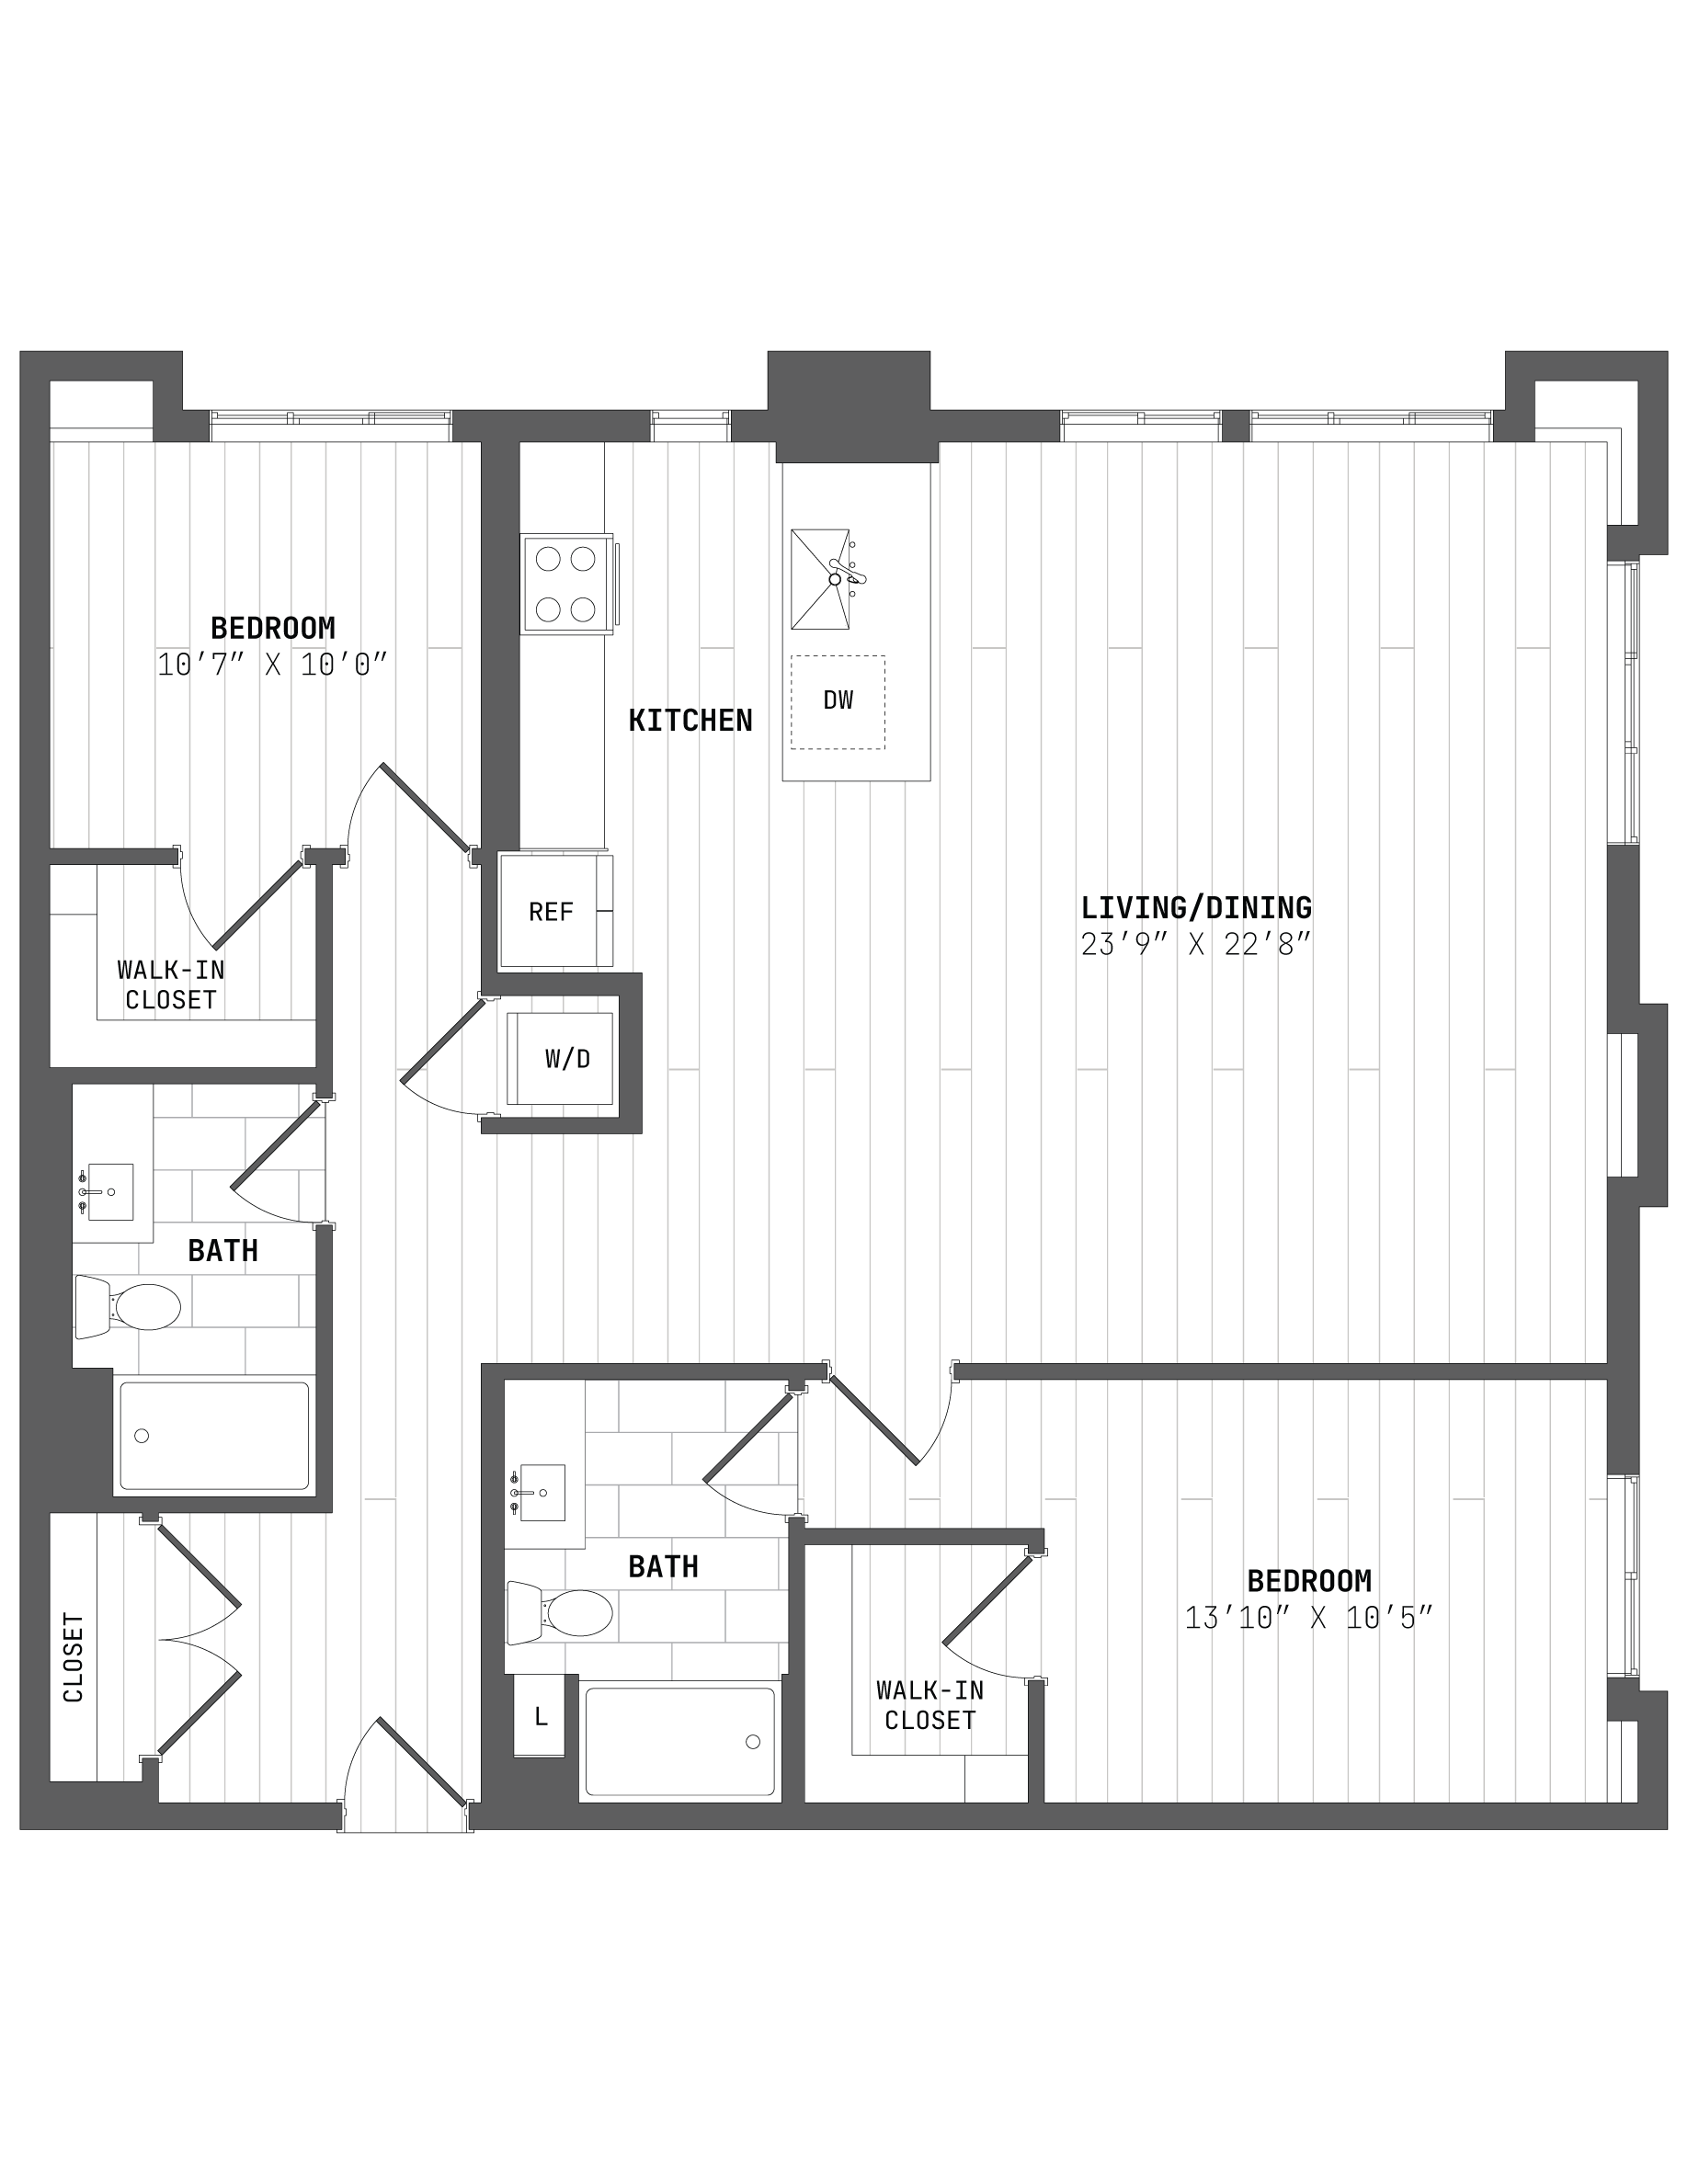 Apartment 4785262 floorplan